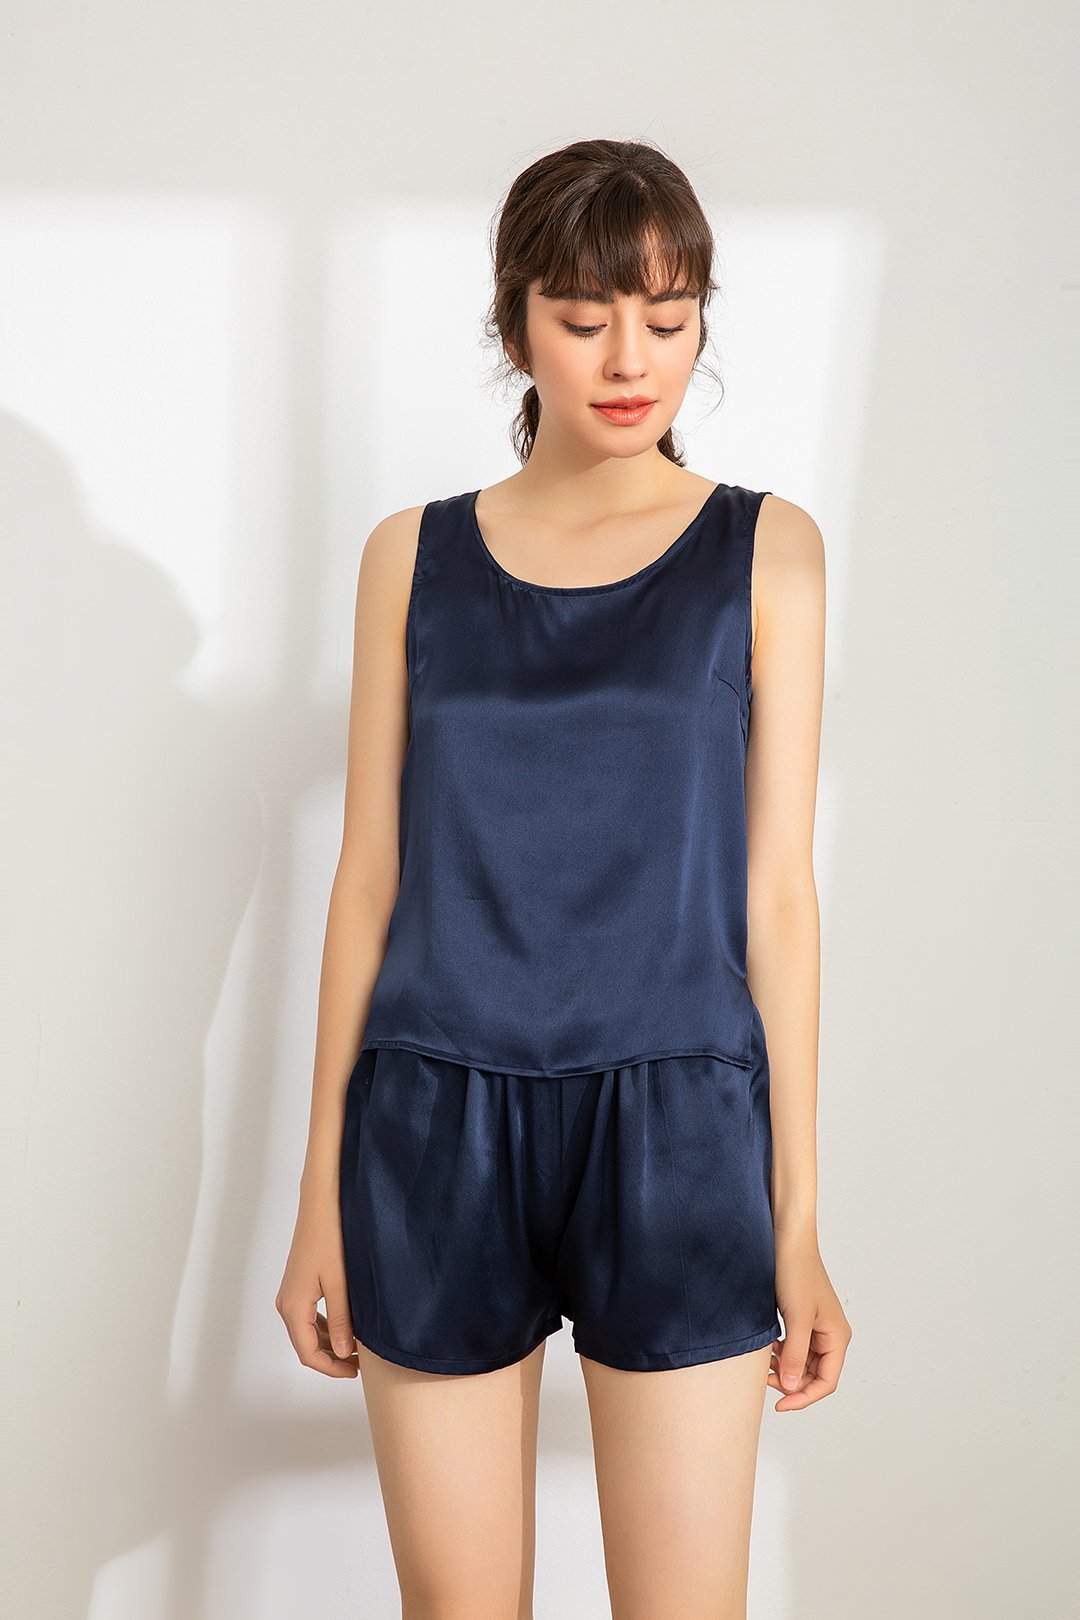 UU BEN Women Mulberry Silk Shorts 100% Silk Pajama Lounge Shorts lace Trim  French Knickers Sleepwear Bloomer for Women at  Women's Clothing store